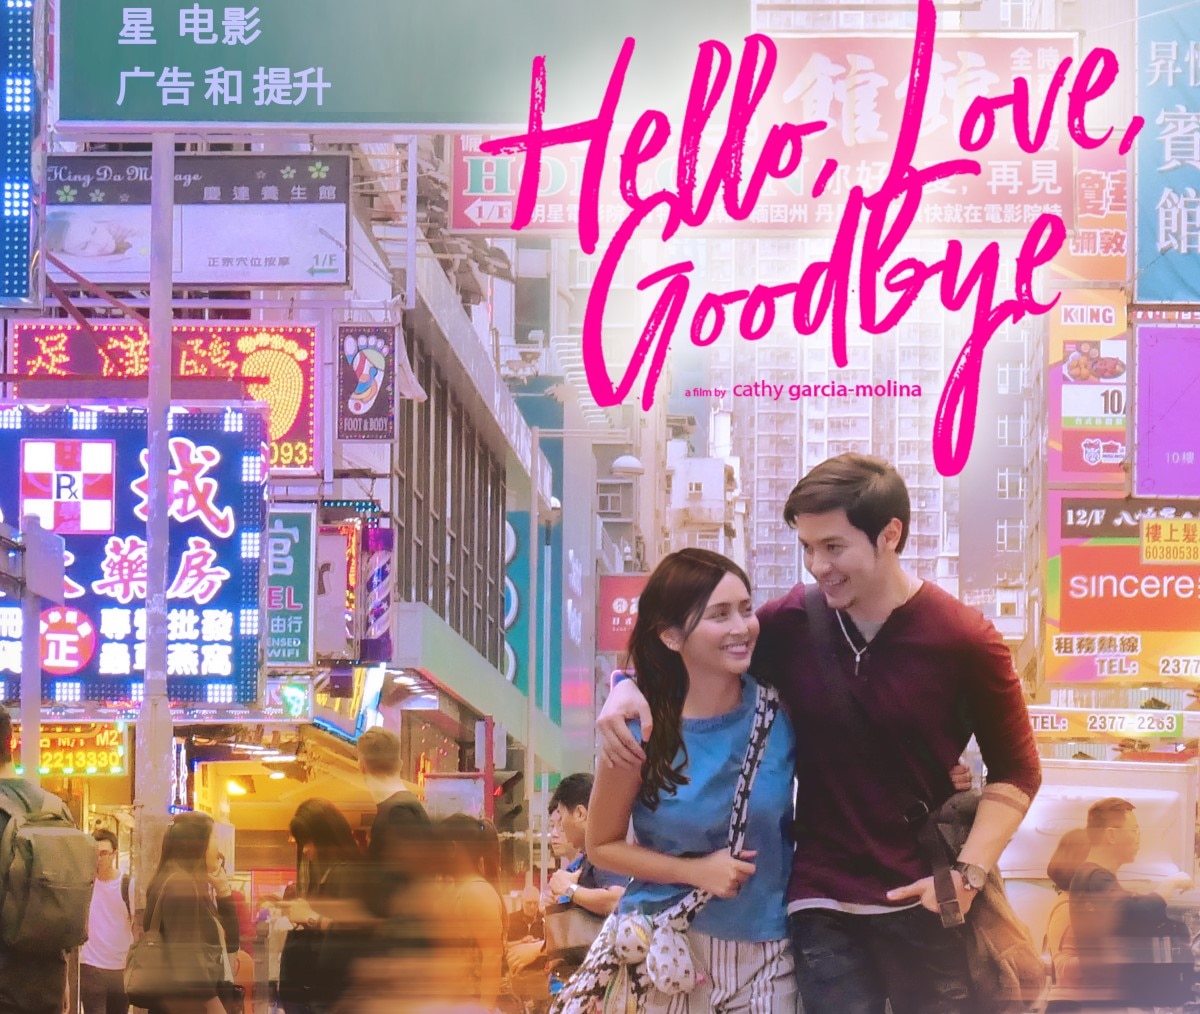 Record-breaking Philippine film Hello, Love, Goodbye returns to